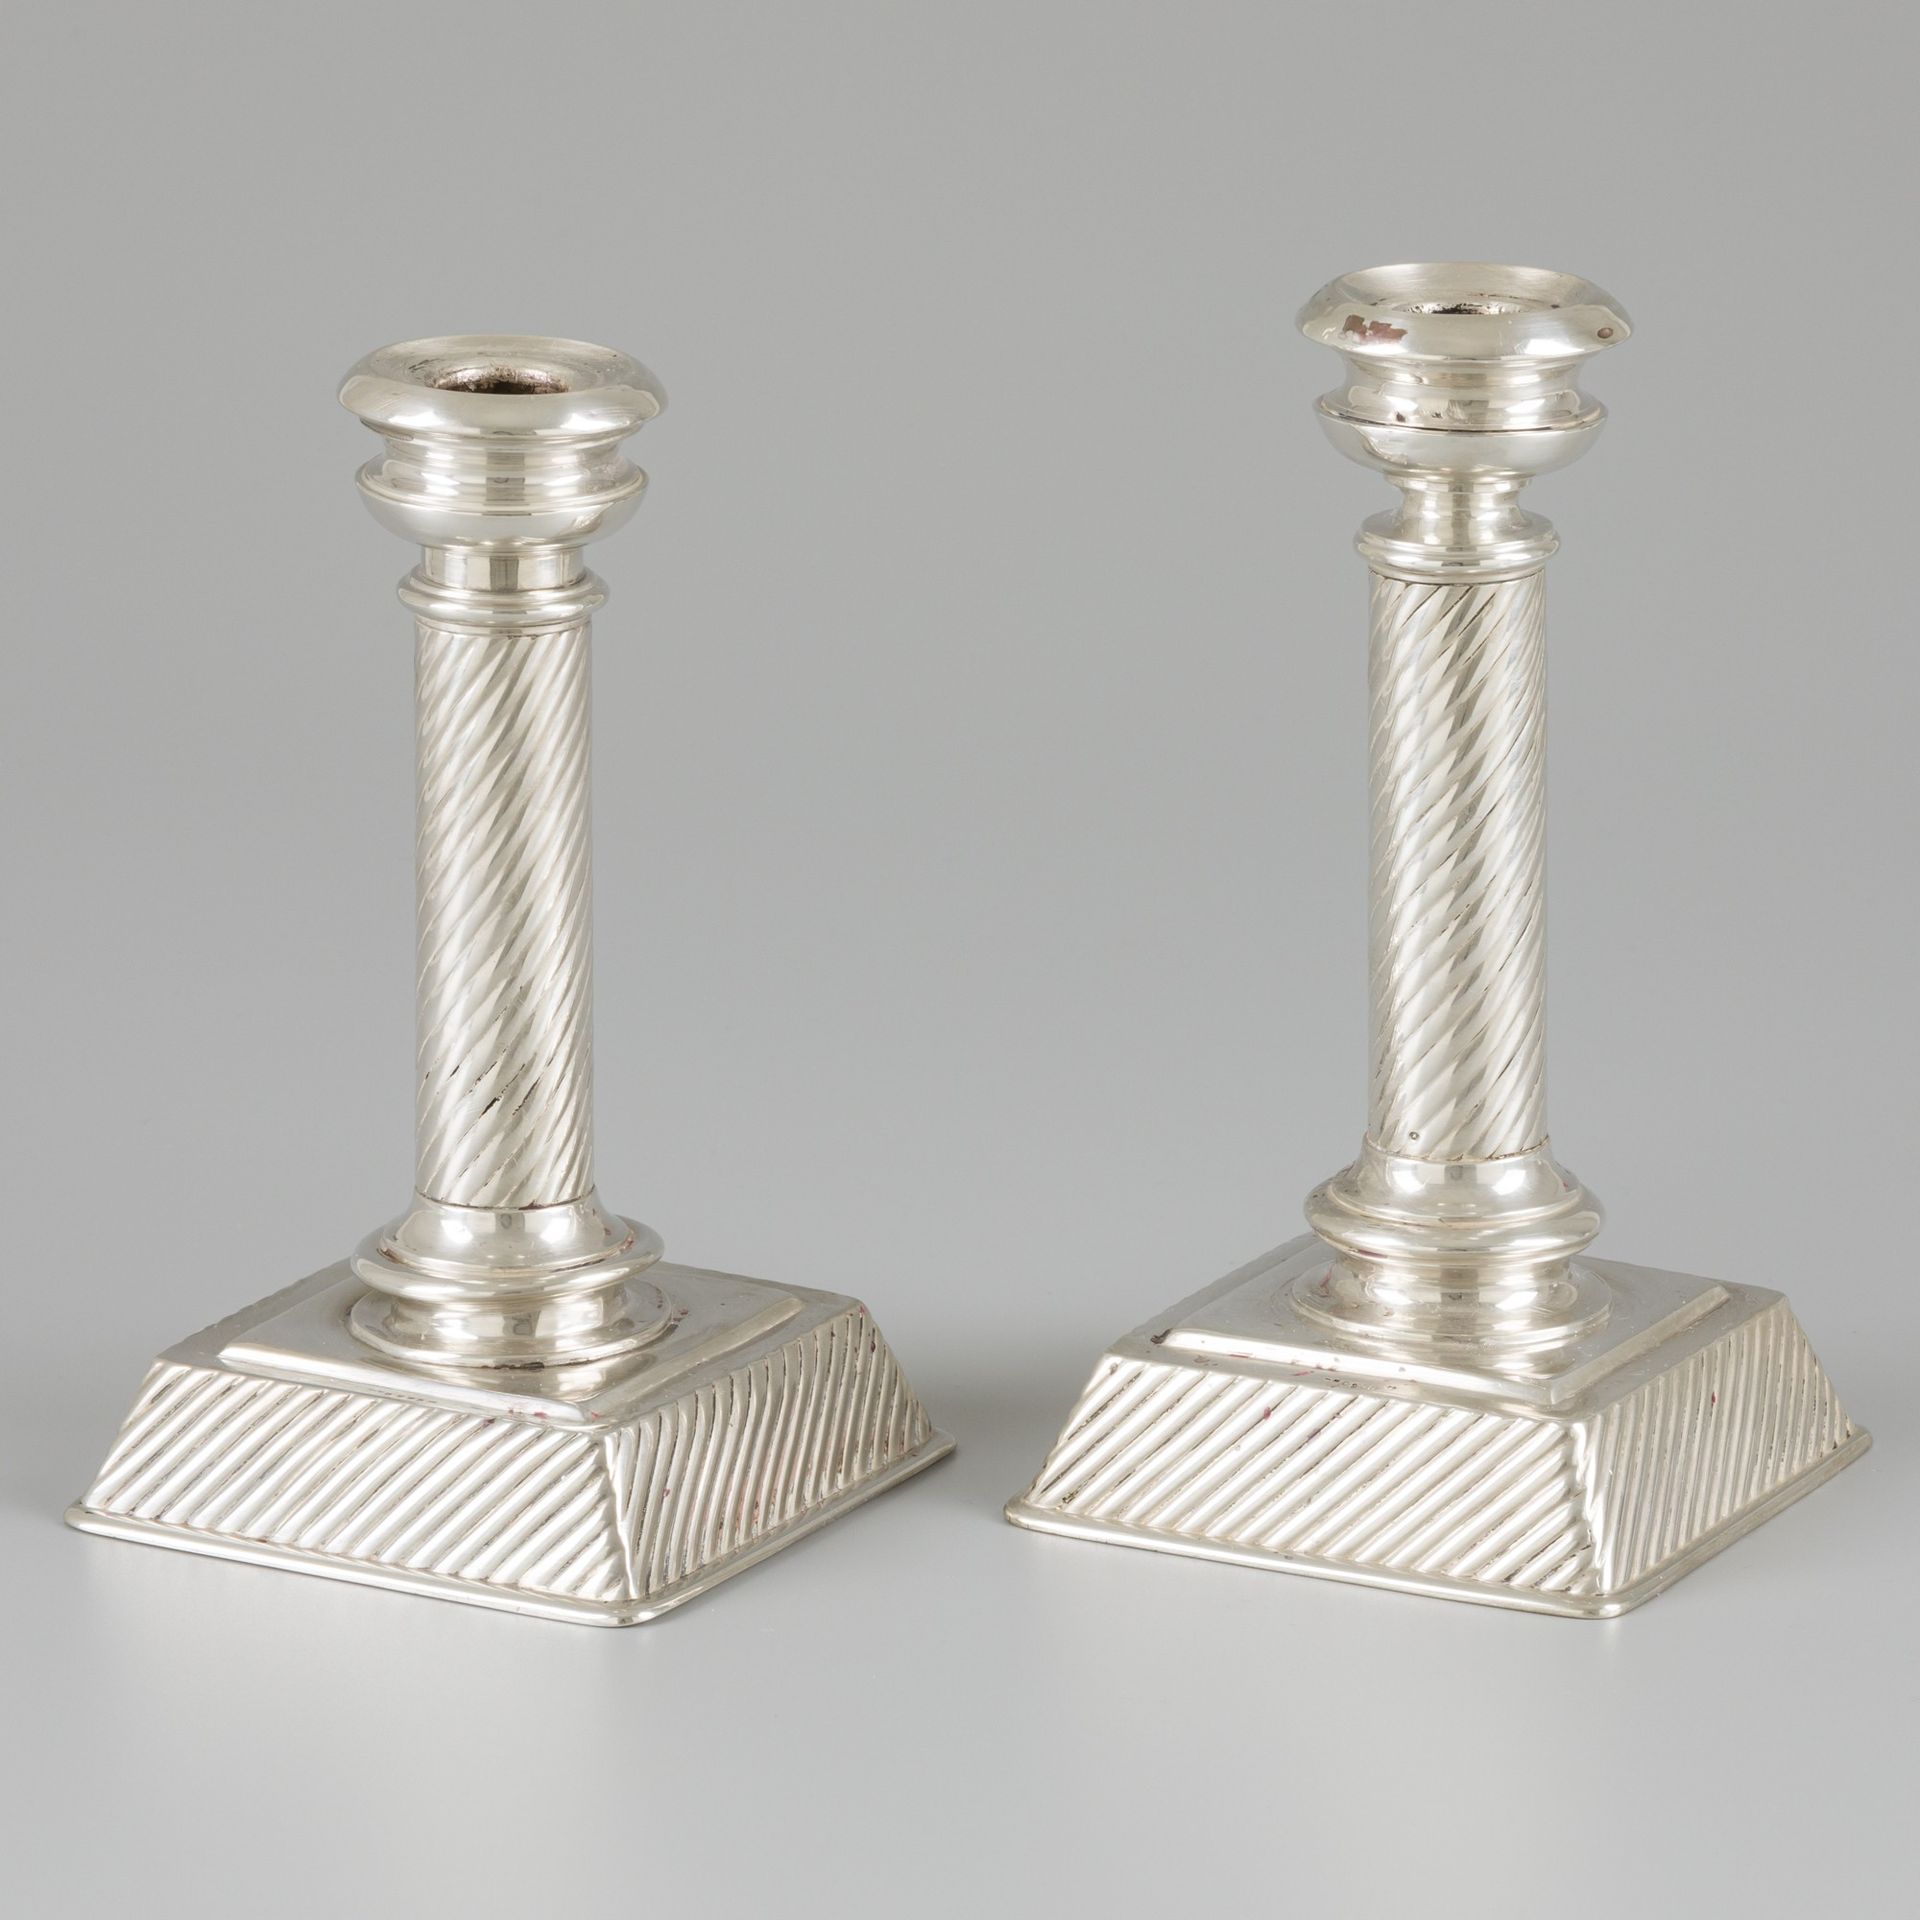 2-delige set kandelaren zilver. 在一个凸起的底座上呈柱状。两者在尺寸上略有不同。奥地利/匈牙利，1867-1872年。奥匈帝国，&hellip;